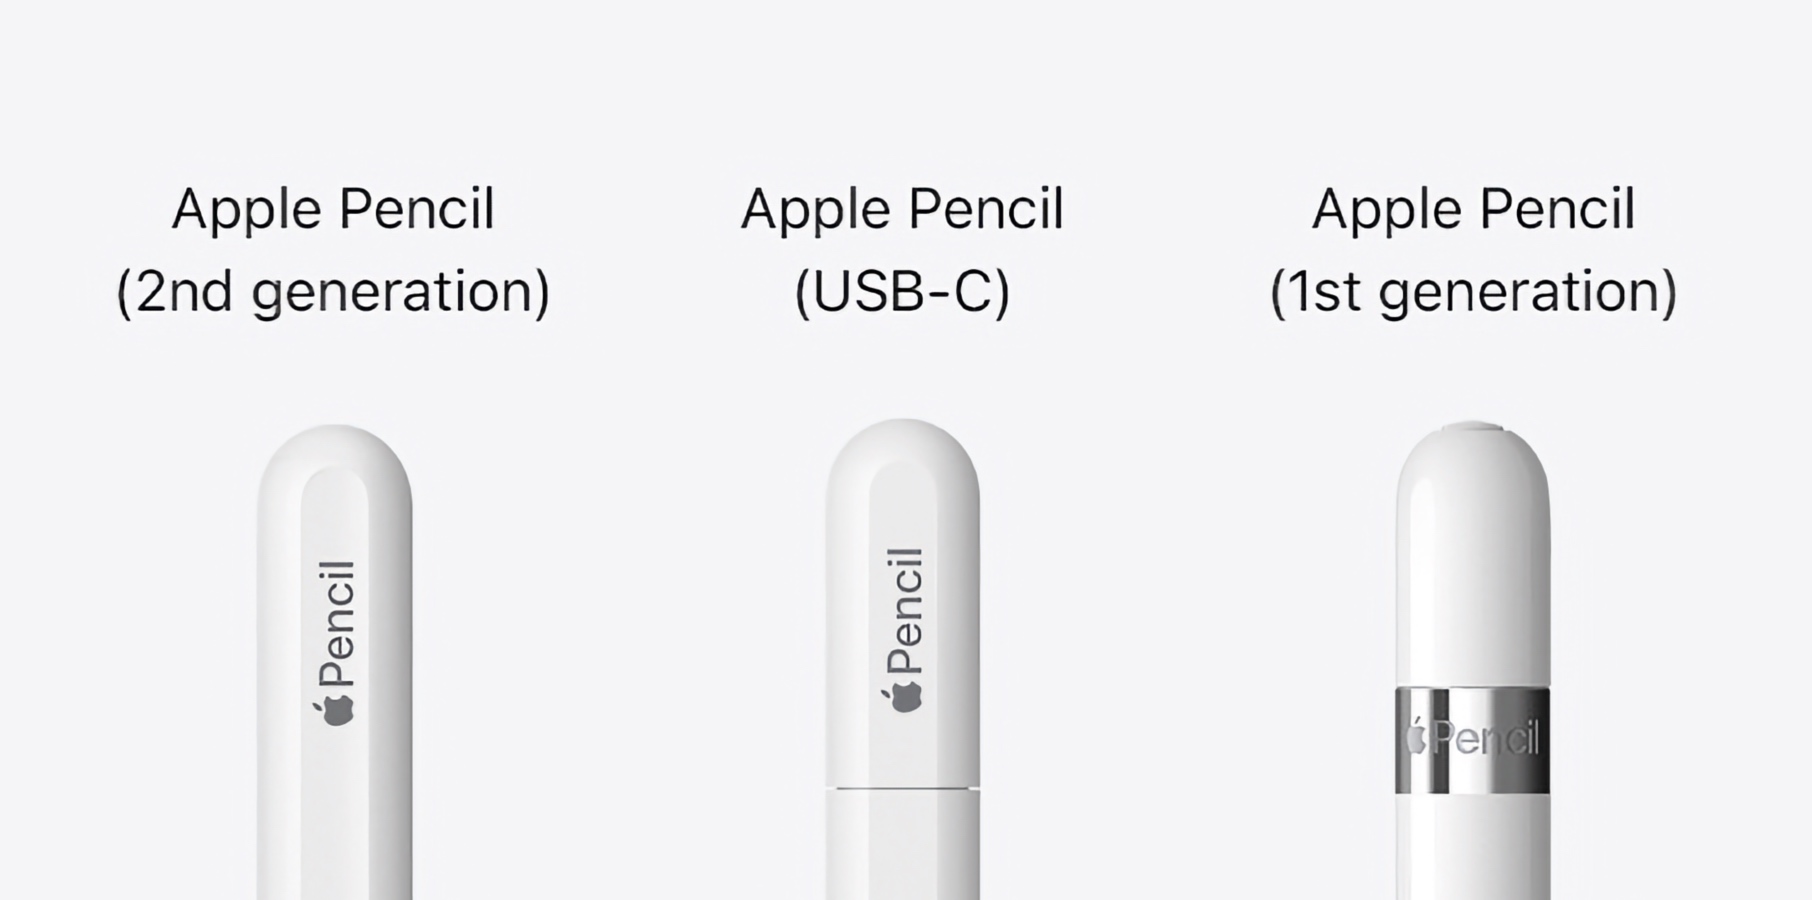 Apple Pencil 1 vs Apple Pencil 2 